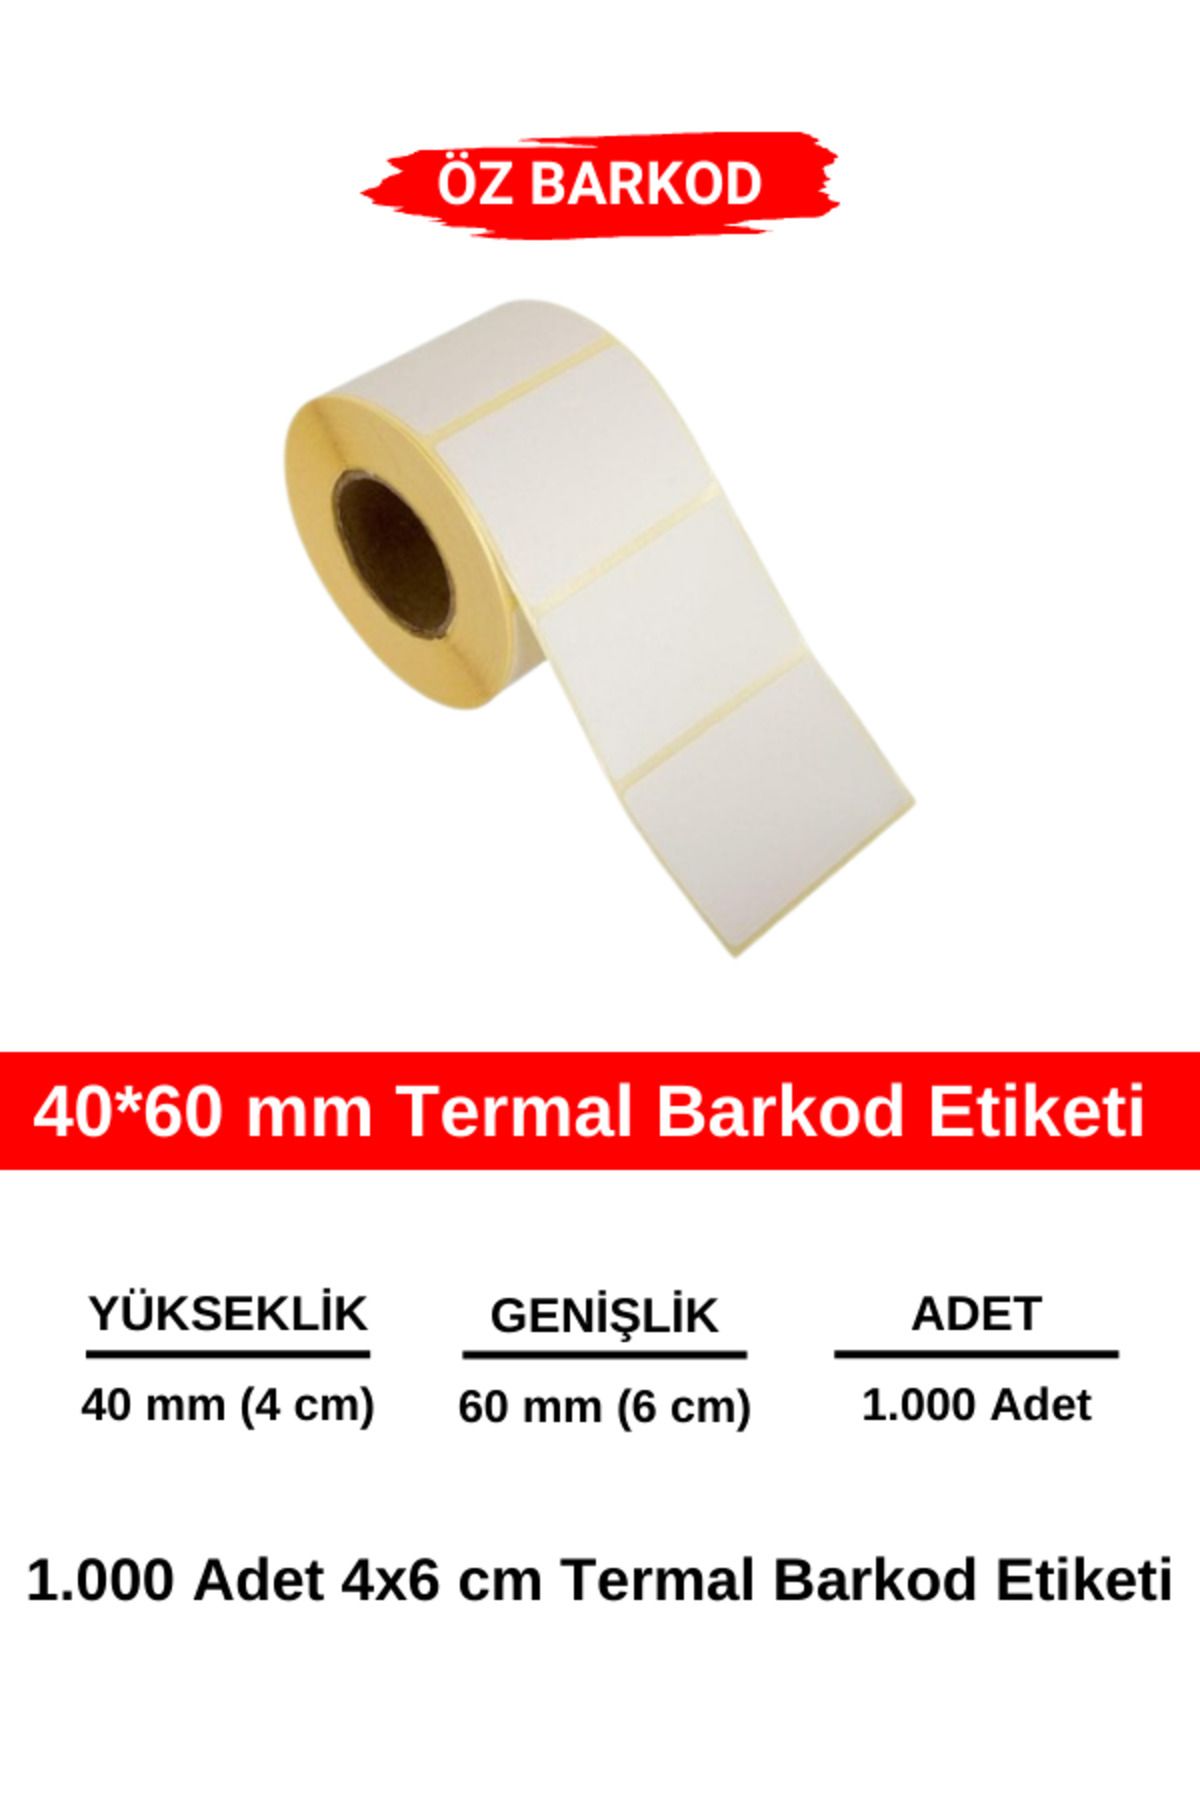 ÖZ BARKOD 40*60 mm Barkod Etiketi - 1000 Adet Termal Etiket